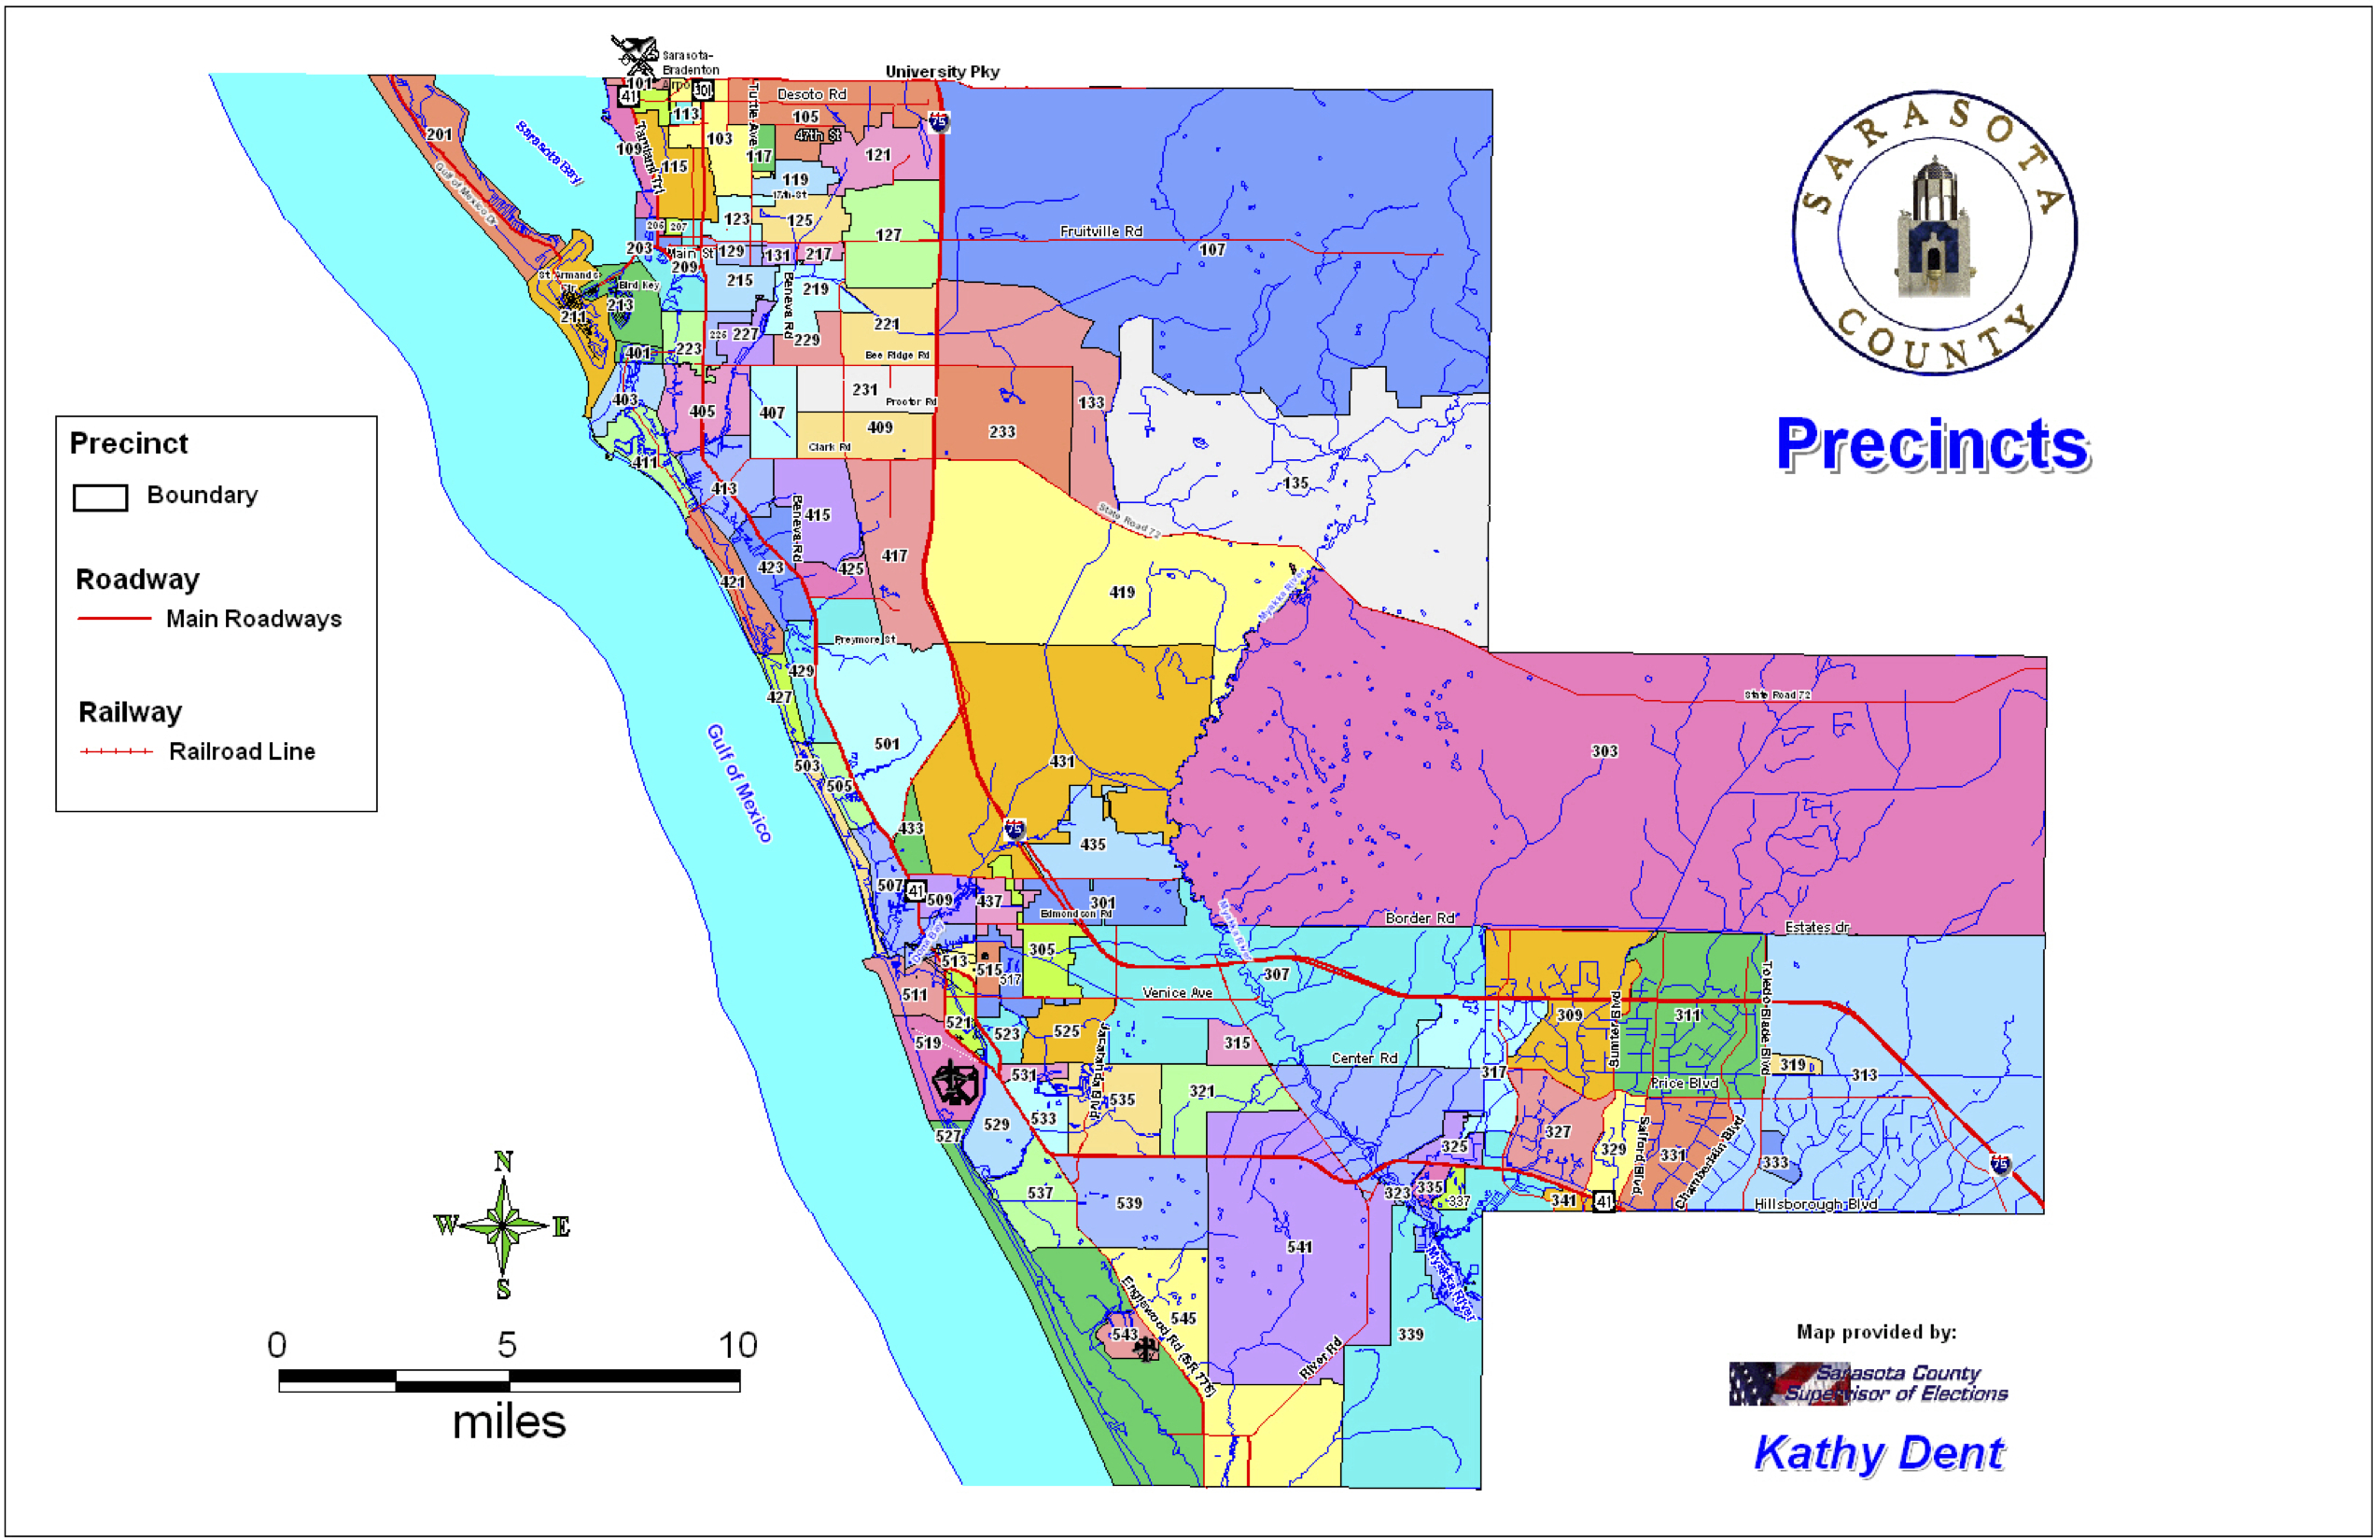 2012 Redistricting map for Sarasota County.